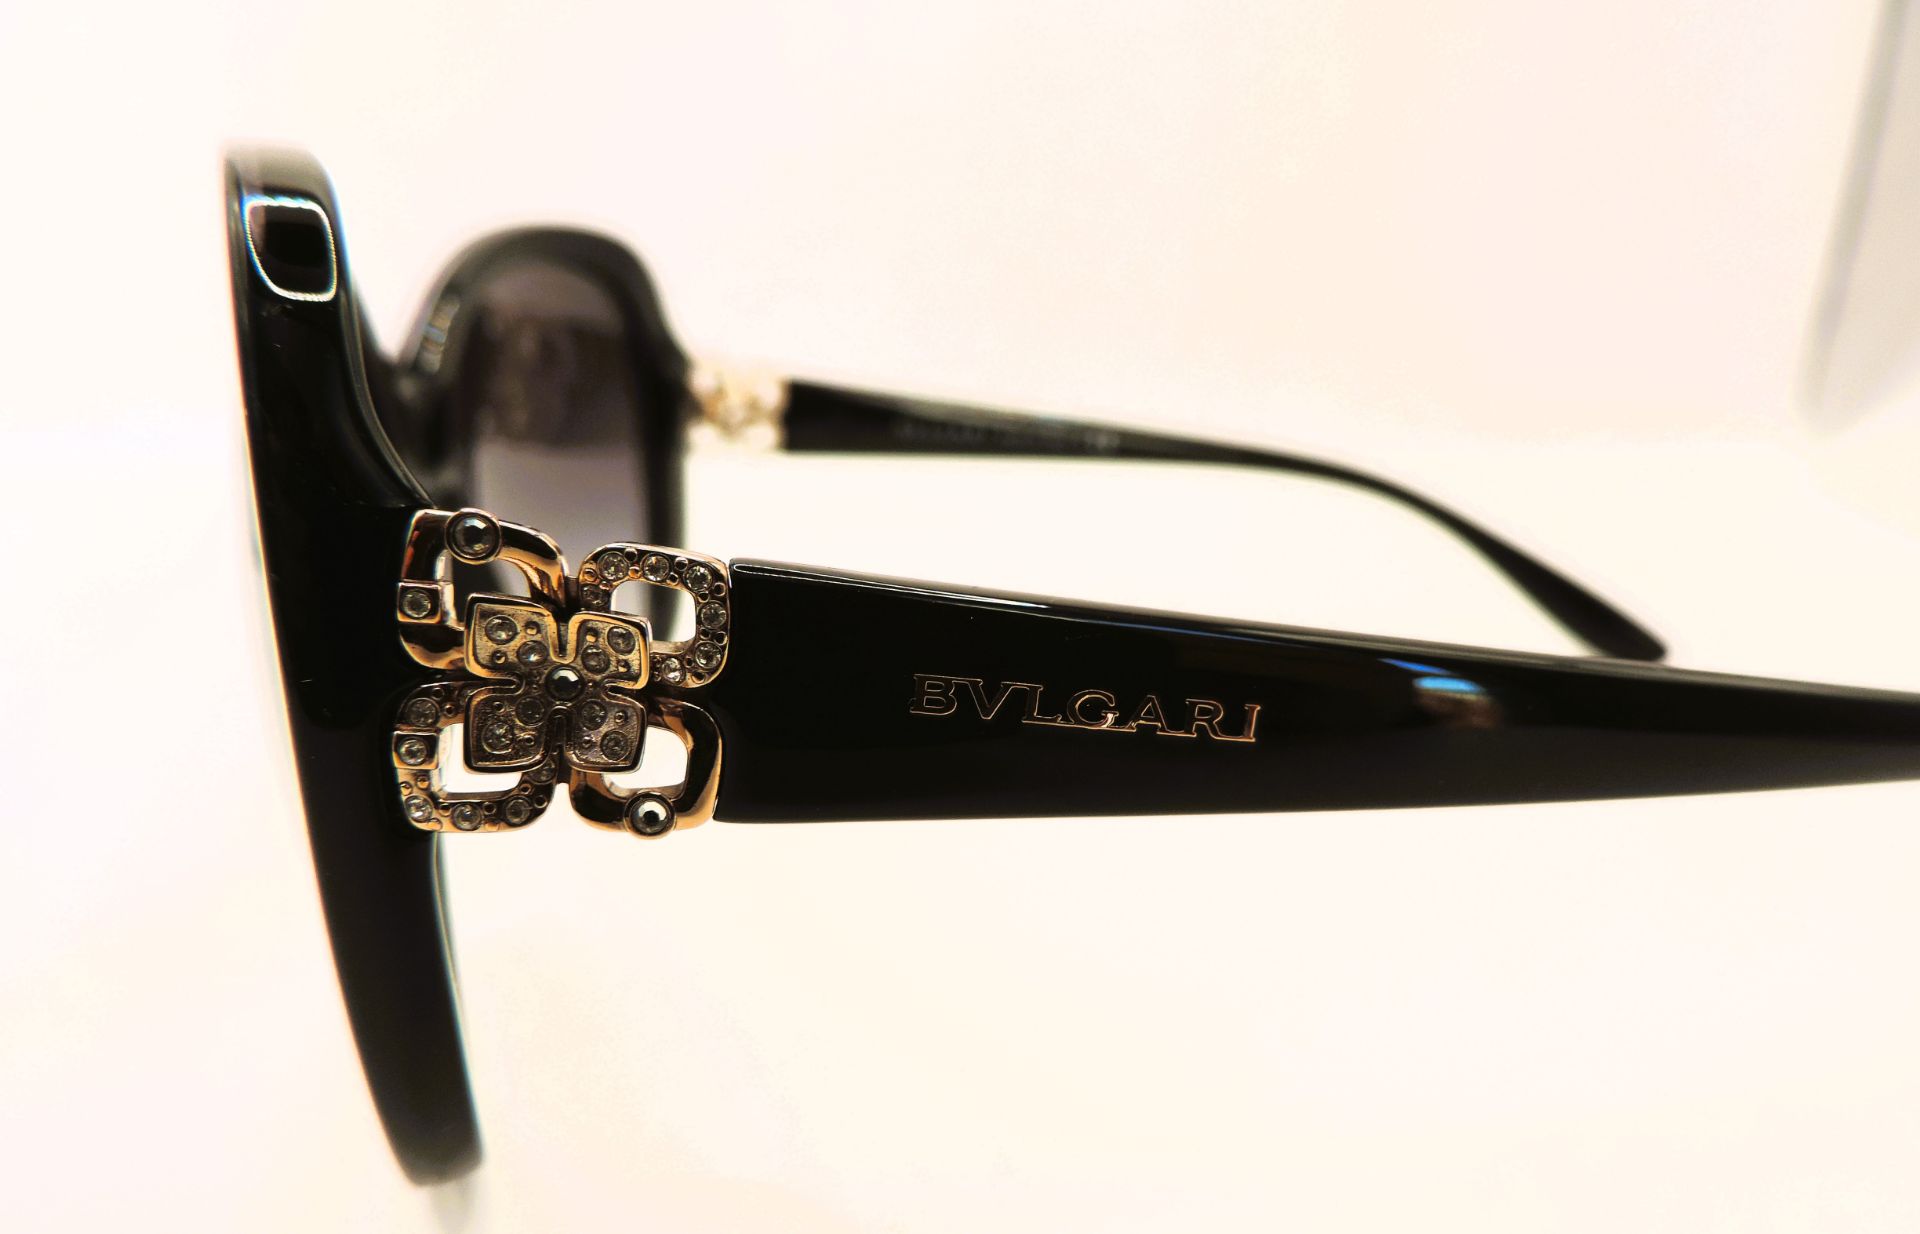 BVLGARI Black Sunglasses 8171-C Jewelled Hinged Detail New With Box & Certificate - Image 3 of 17